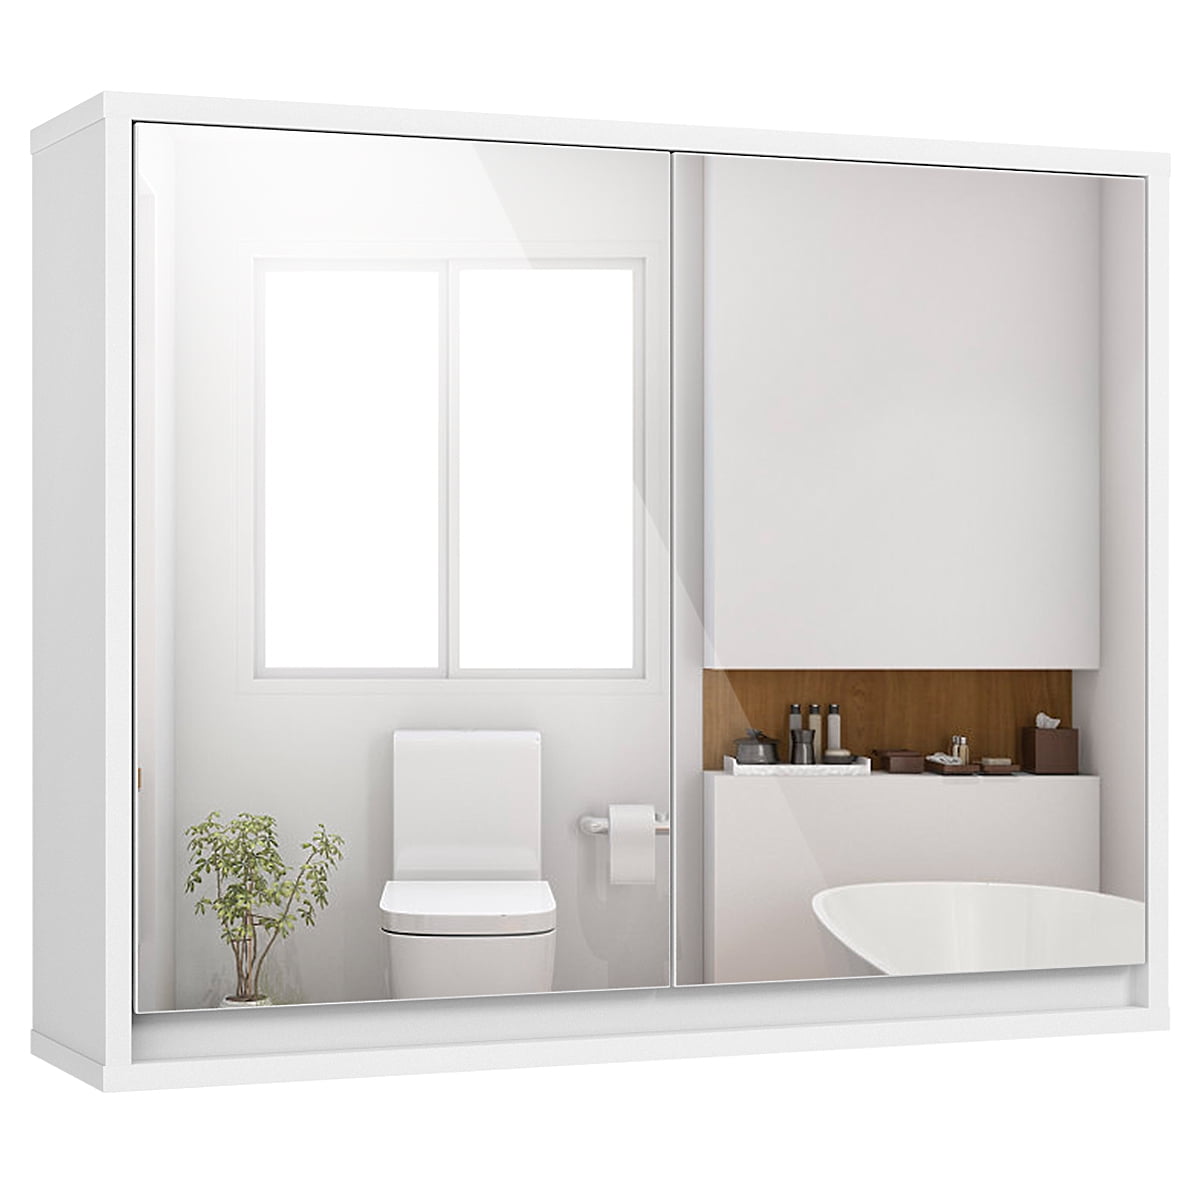 Costway Wall Mounted Bathroom Storage, Bathroom Wall Mount Medicine Cabinet Storage With Mirror Doors Shelf